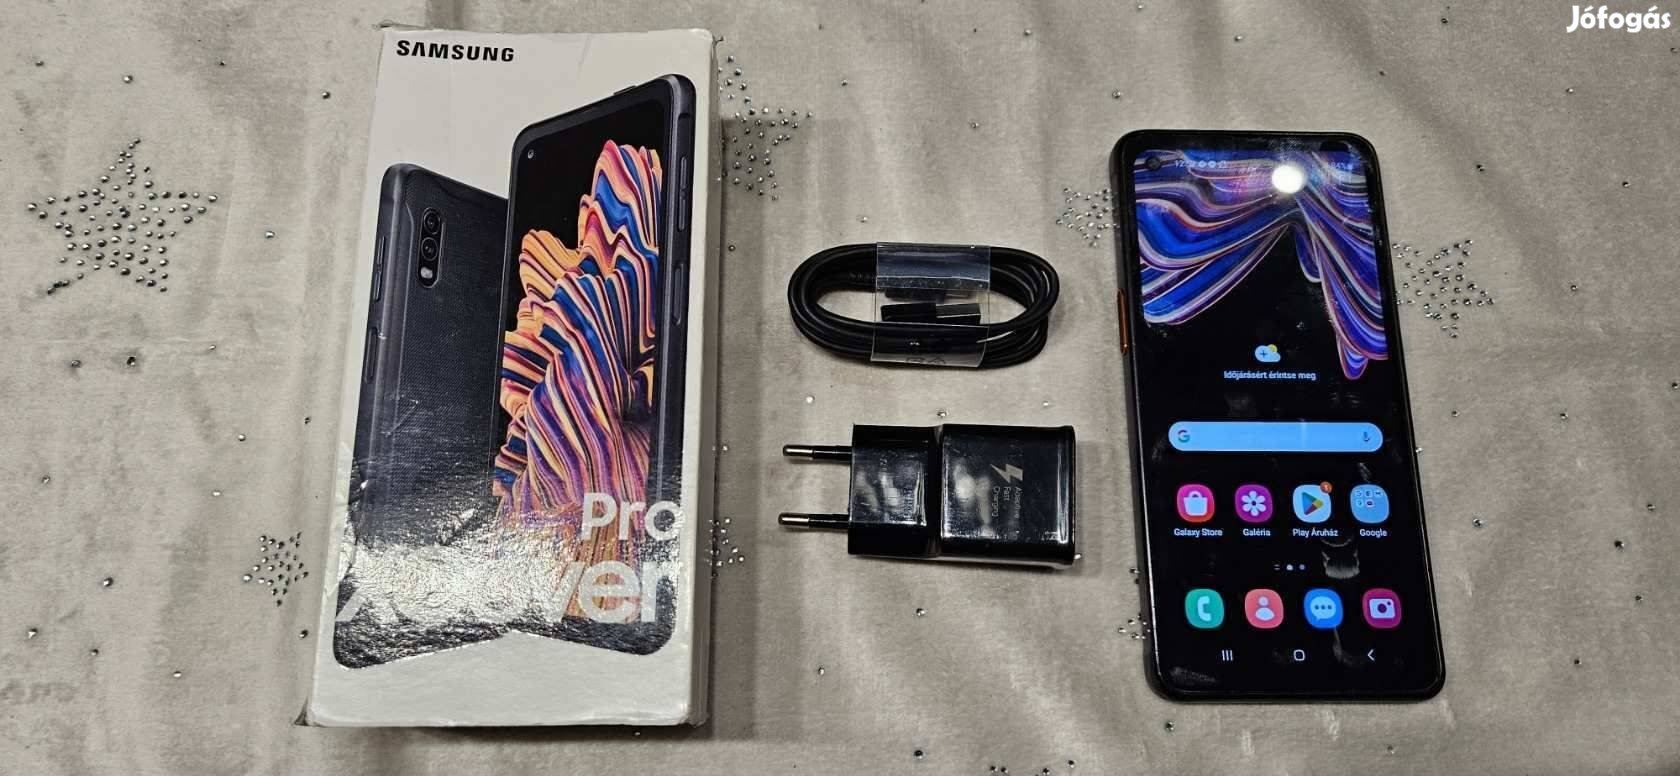 Samsung Galaxy Xcover Pro Dual Független Újszerű Fekete Garis !